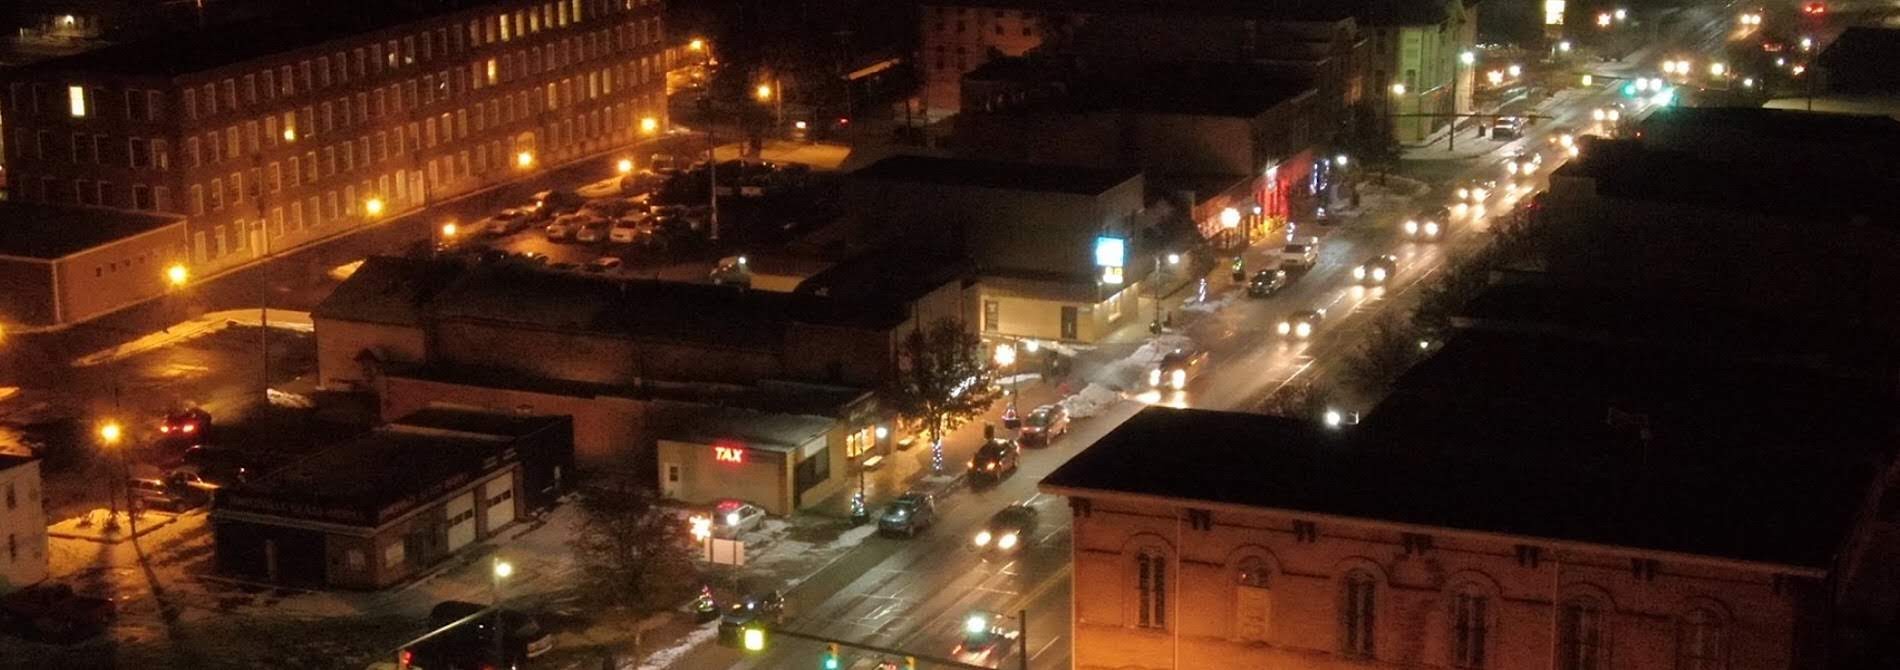 night aerial view of downtown jonesville